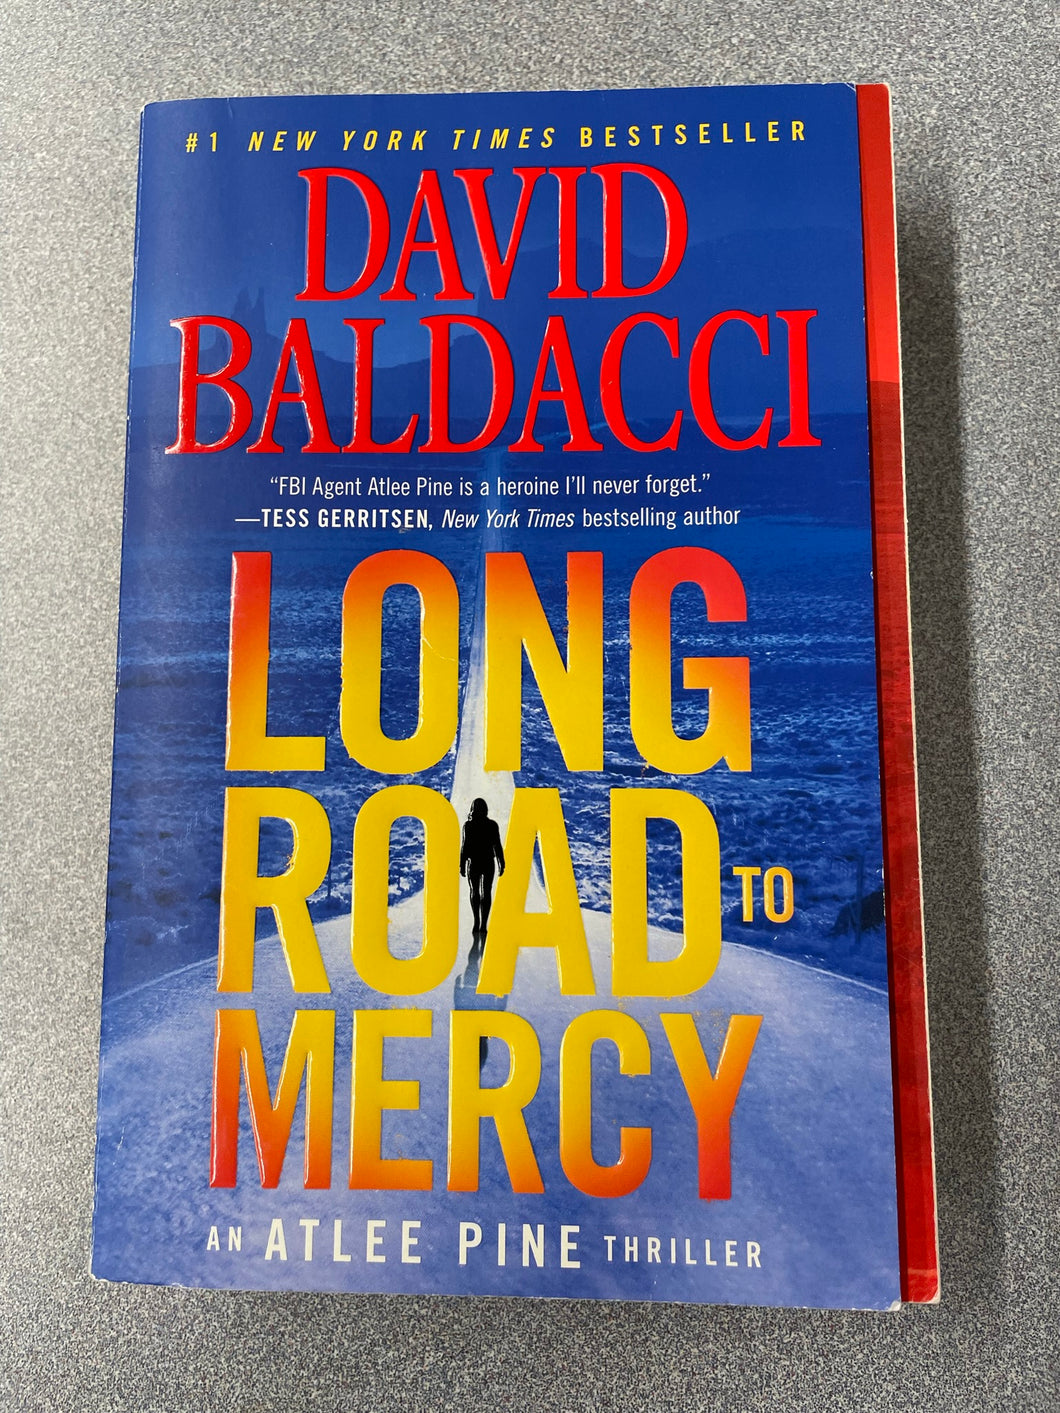 Baldacci, David, Long Road to Mercy [2018] MY 7/23